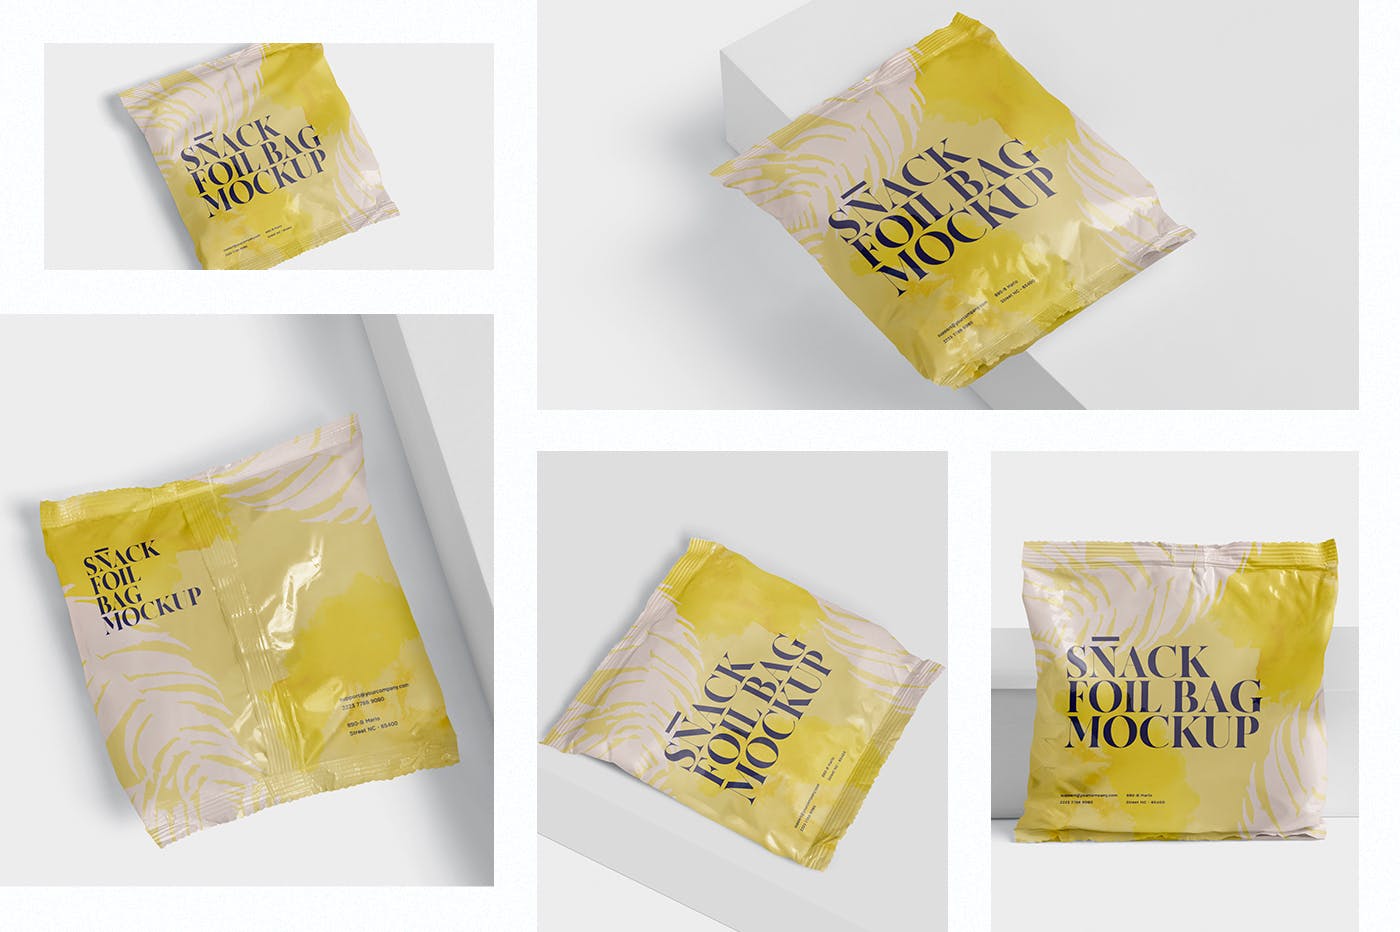 小吃零食铝箔包装袋设计图非凡图库精选 Snack Foil Bag Mockup – Square Size – Small插图(1)